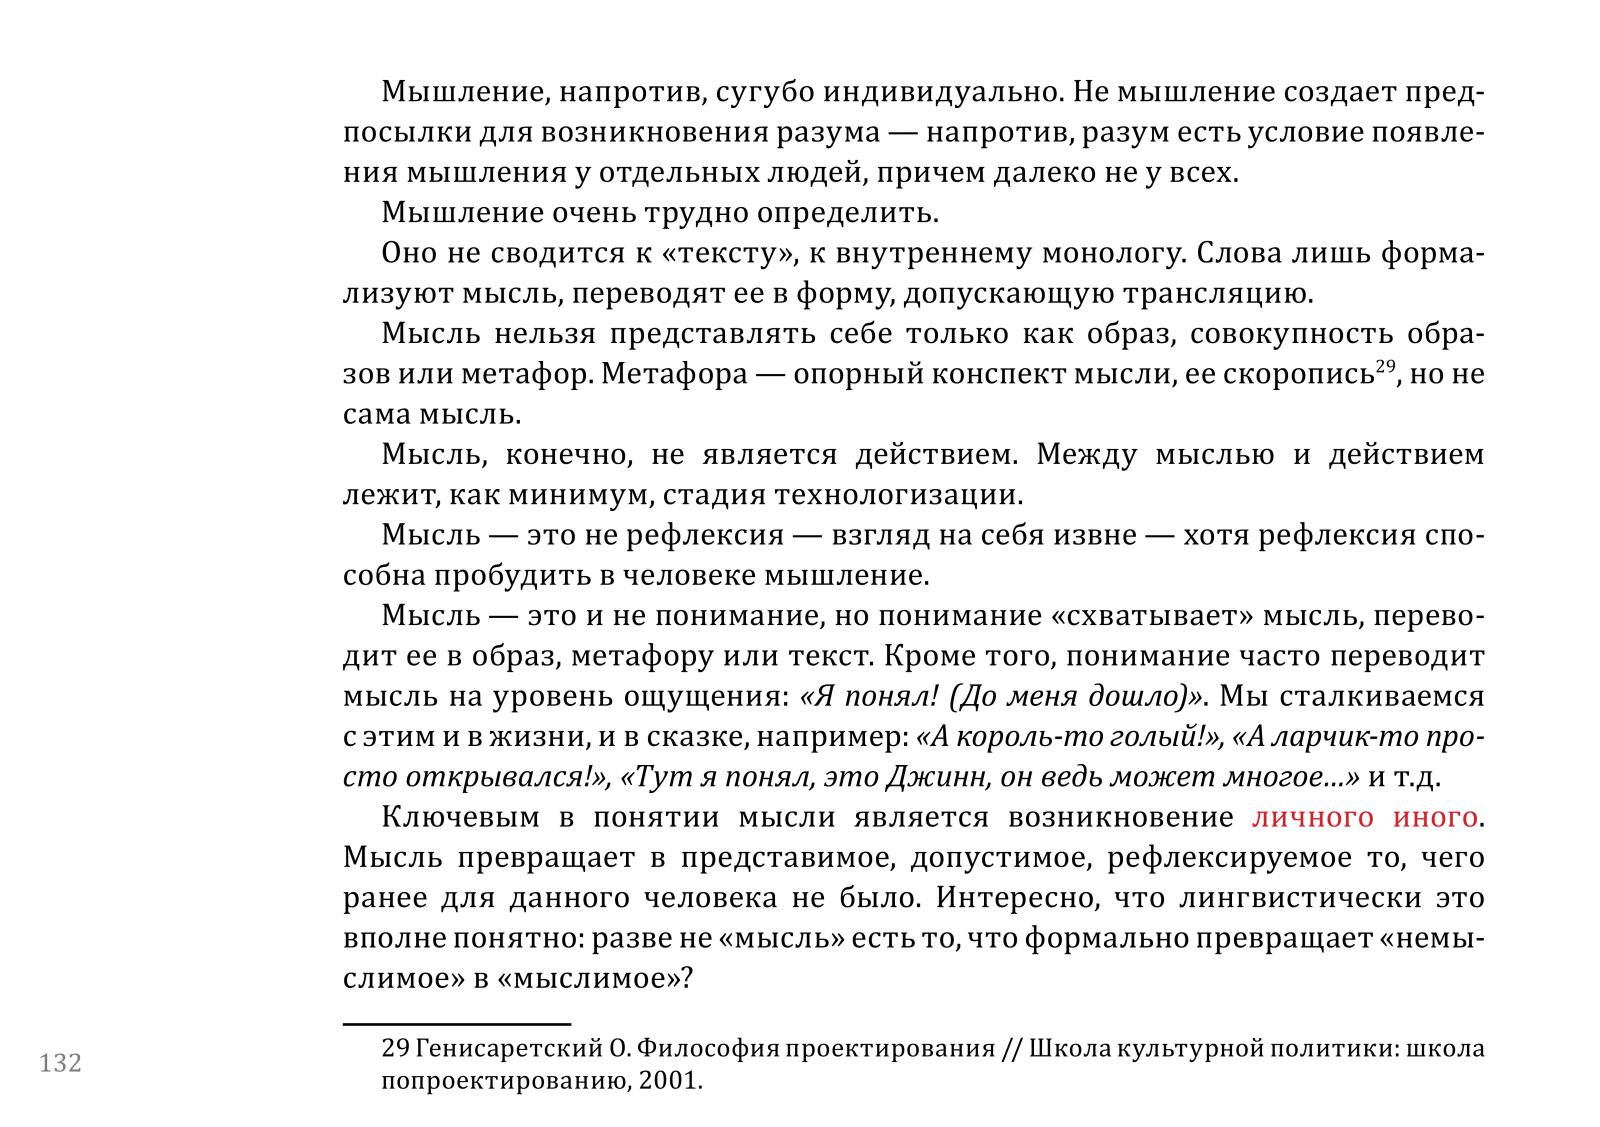 Монолог фармацевта 71 глава на русском